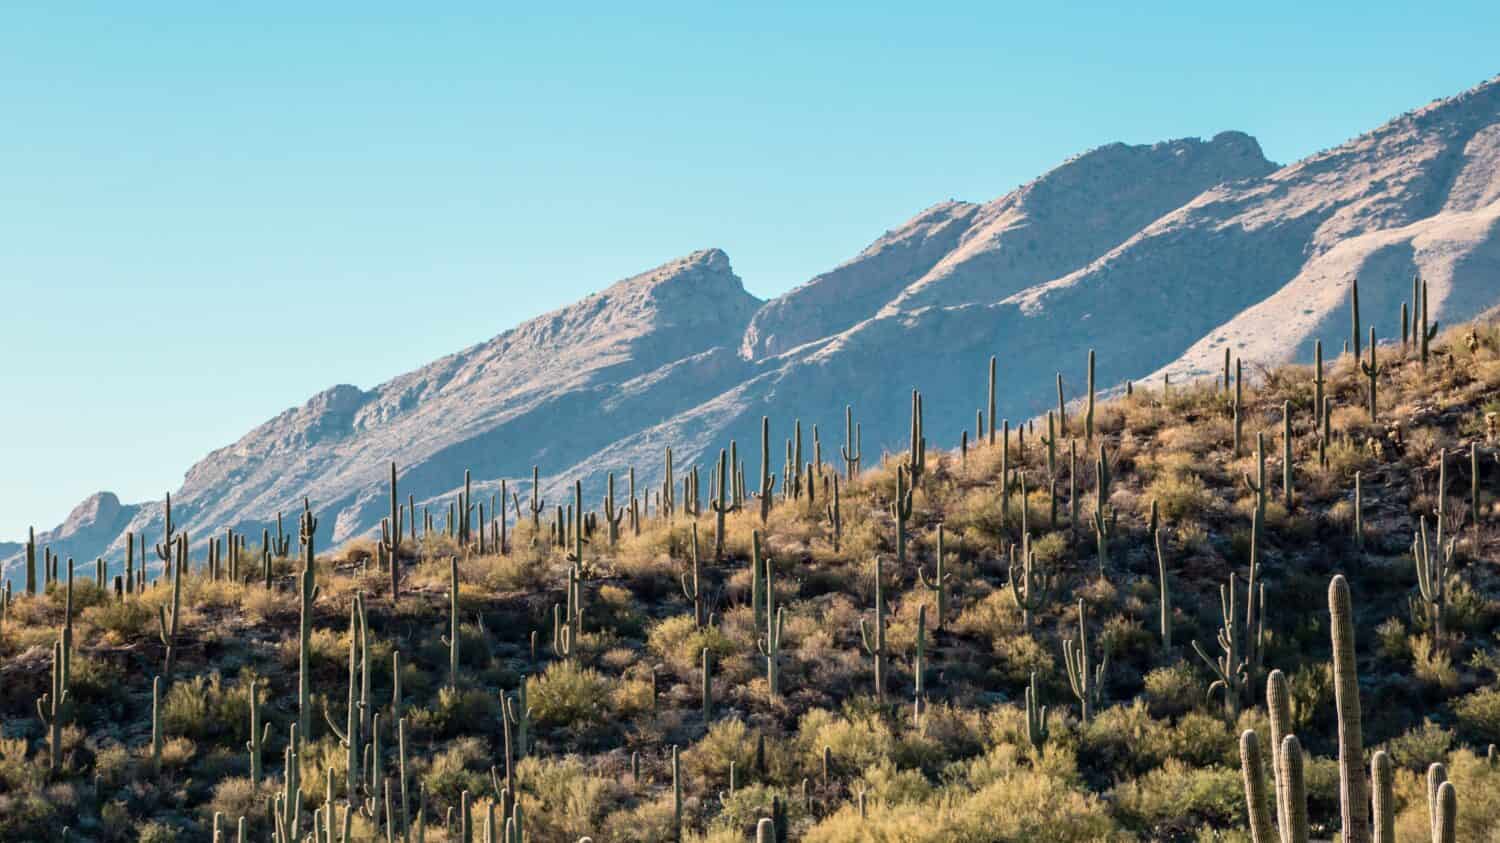 Santa Catalina Mountains and Saguaro Cacti on the ridge in Tucson, Arizona.